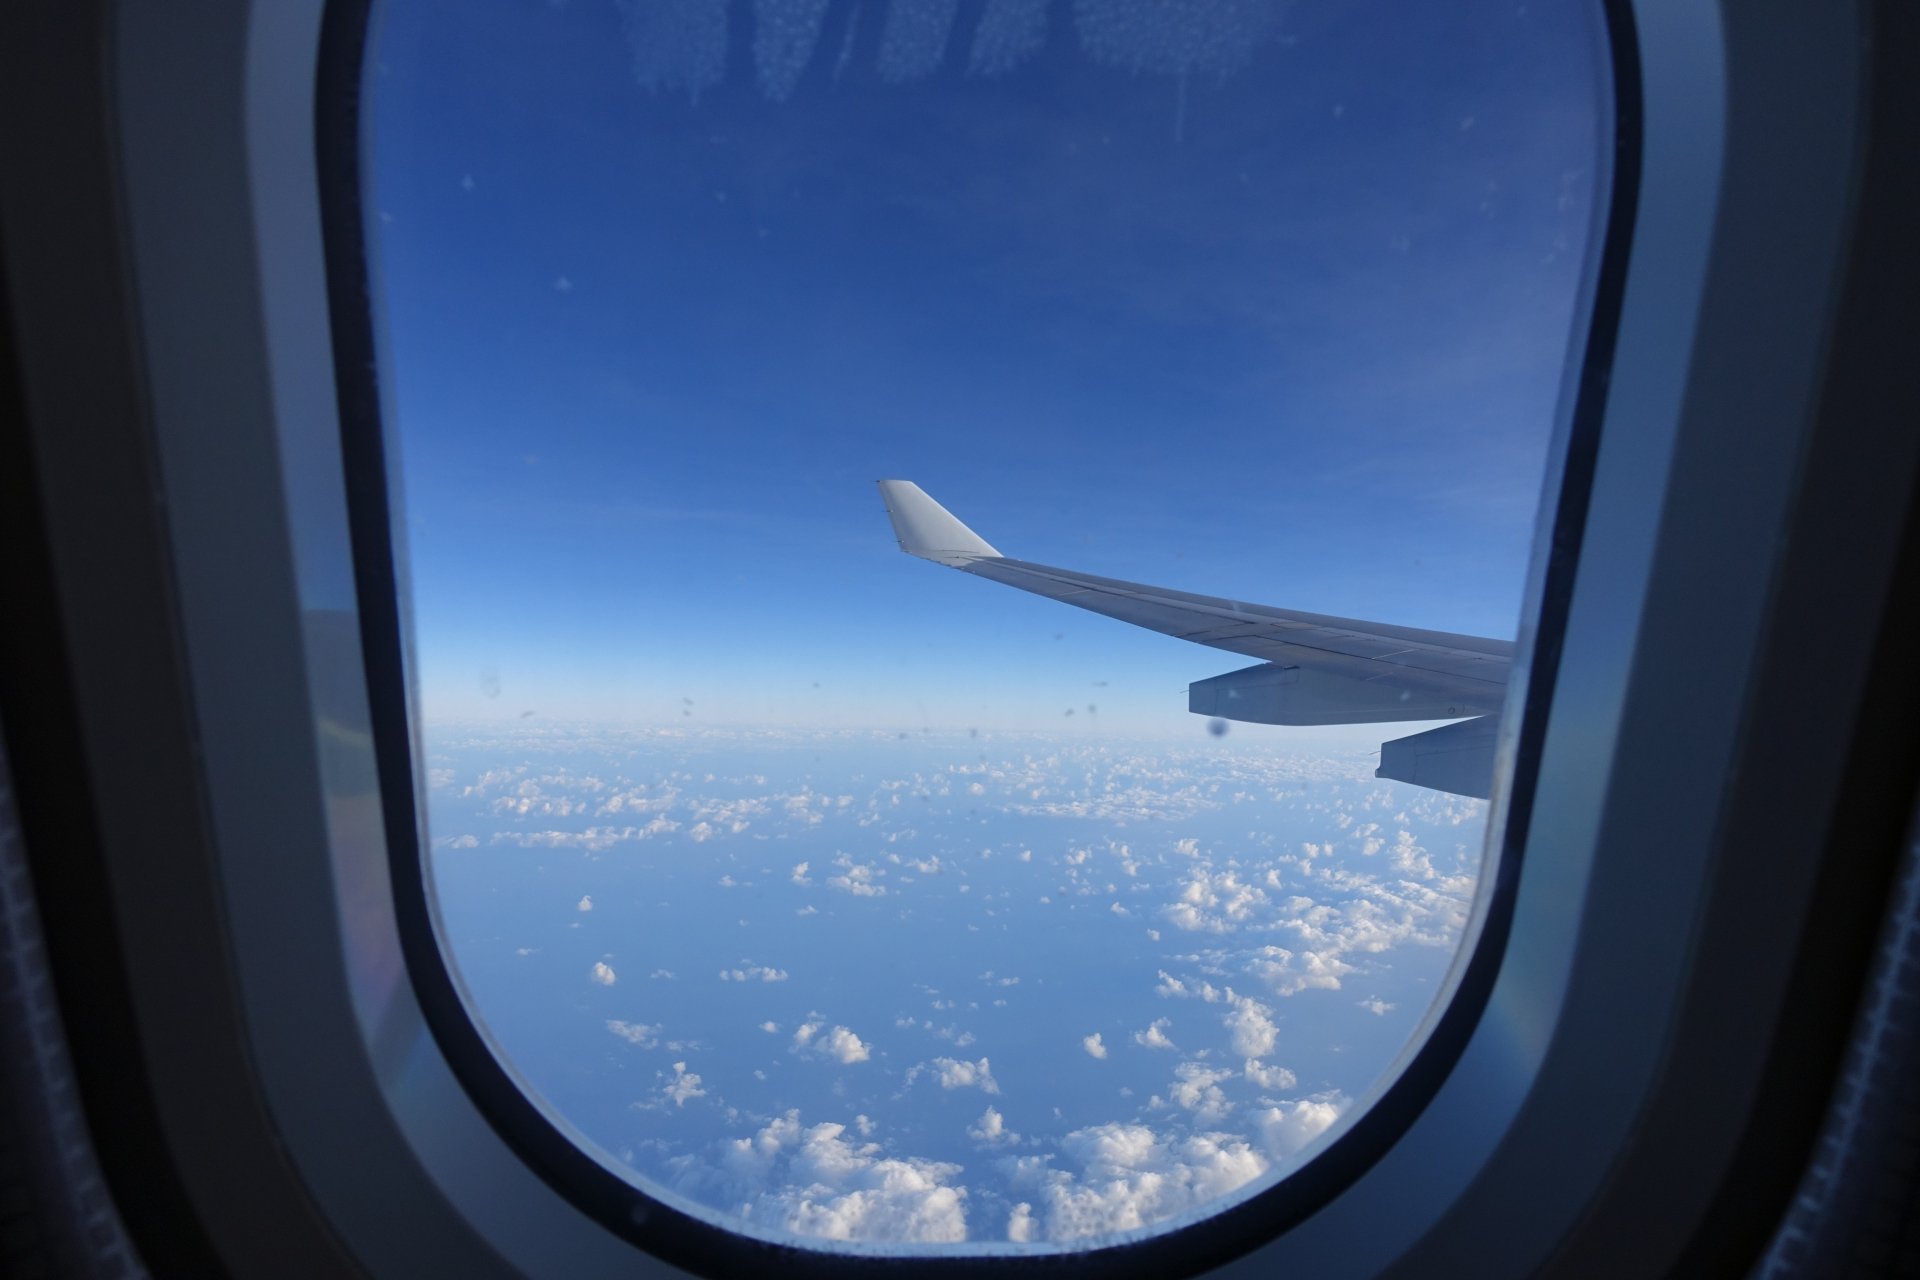 Шторки иллюминаторов. Боинг 777 из иллюминатора. Окно самолета. Иллюминатор самолета. Вид из иллюминатора самолета.